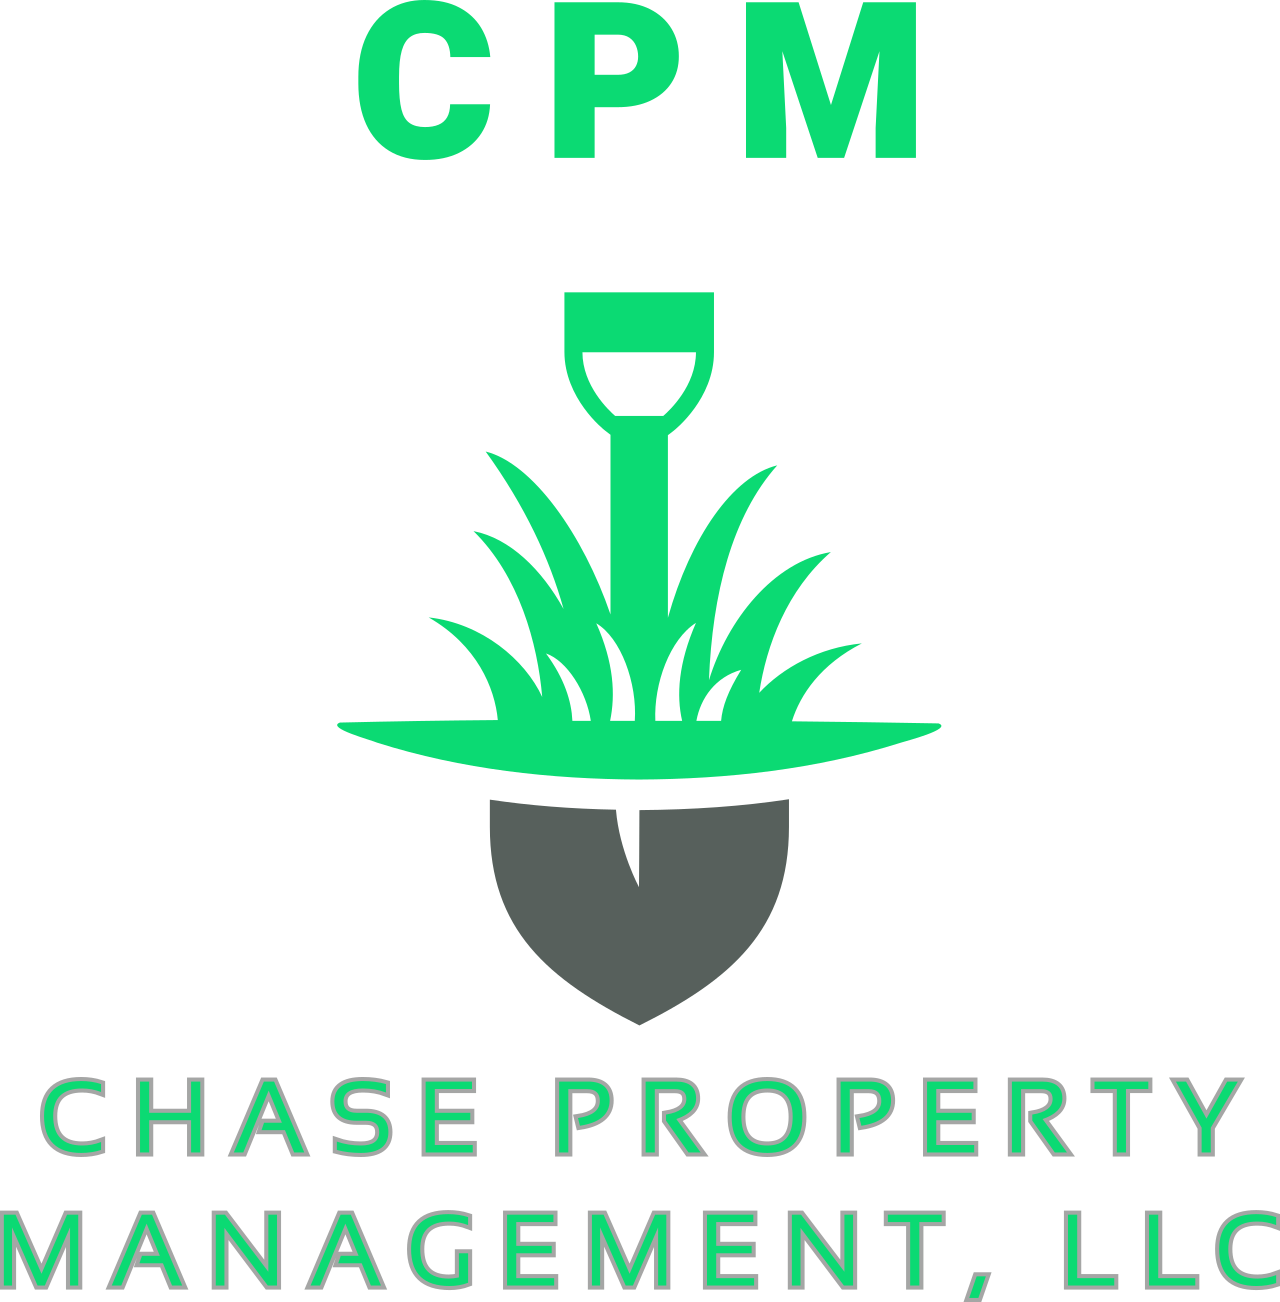 CPM's web page